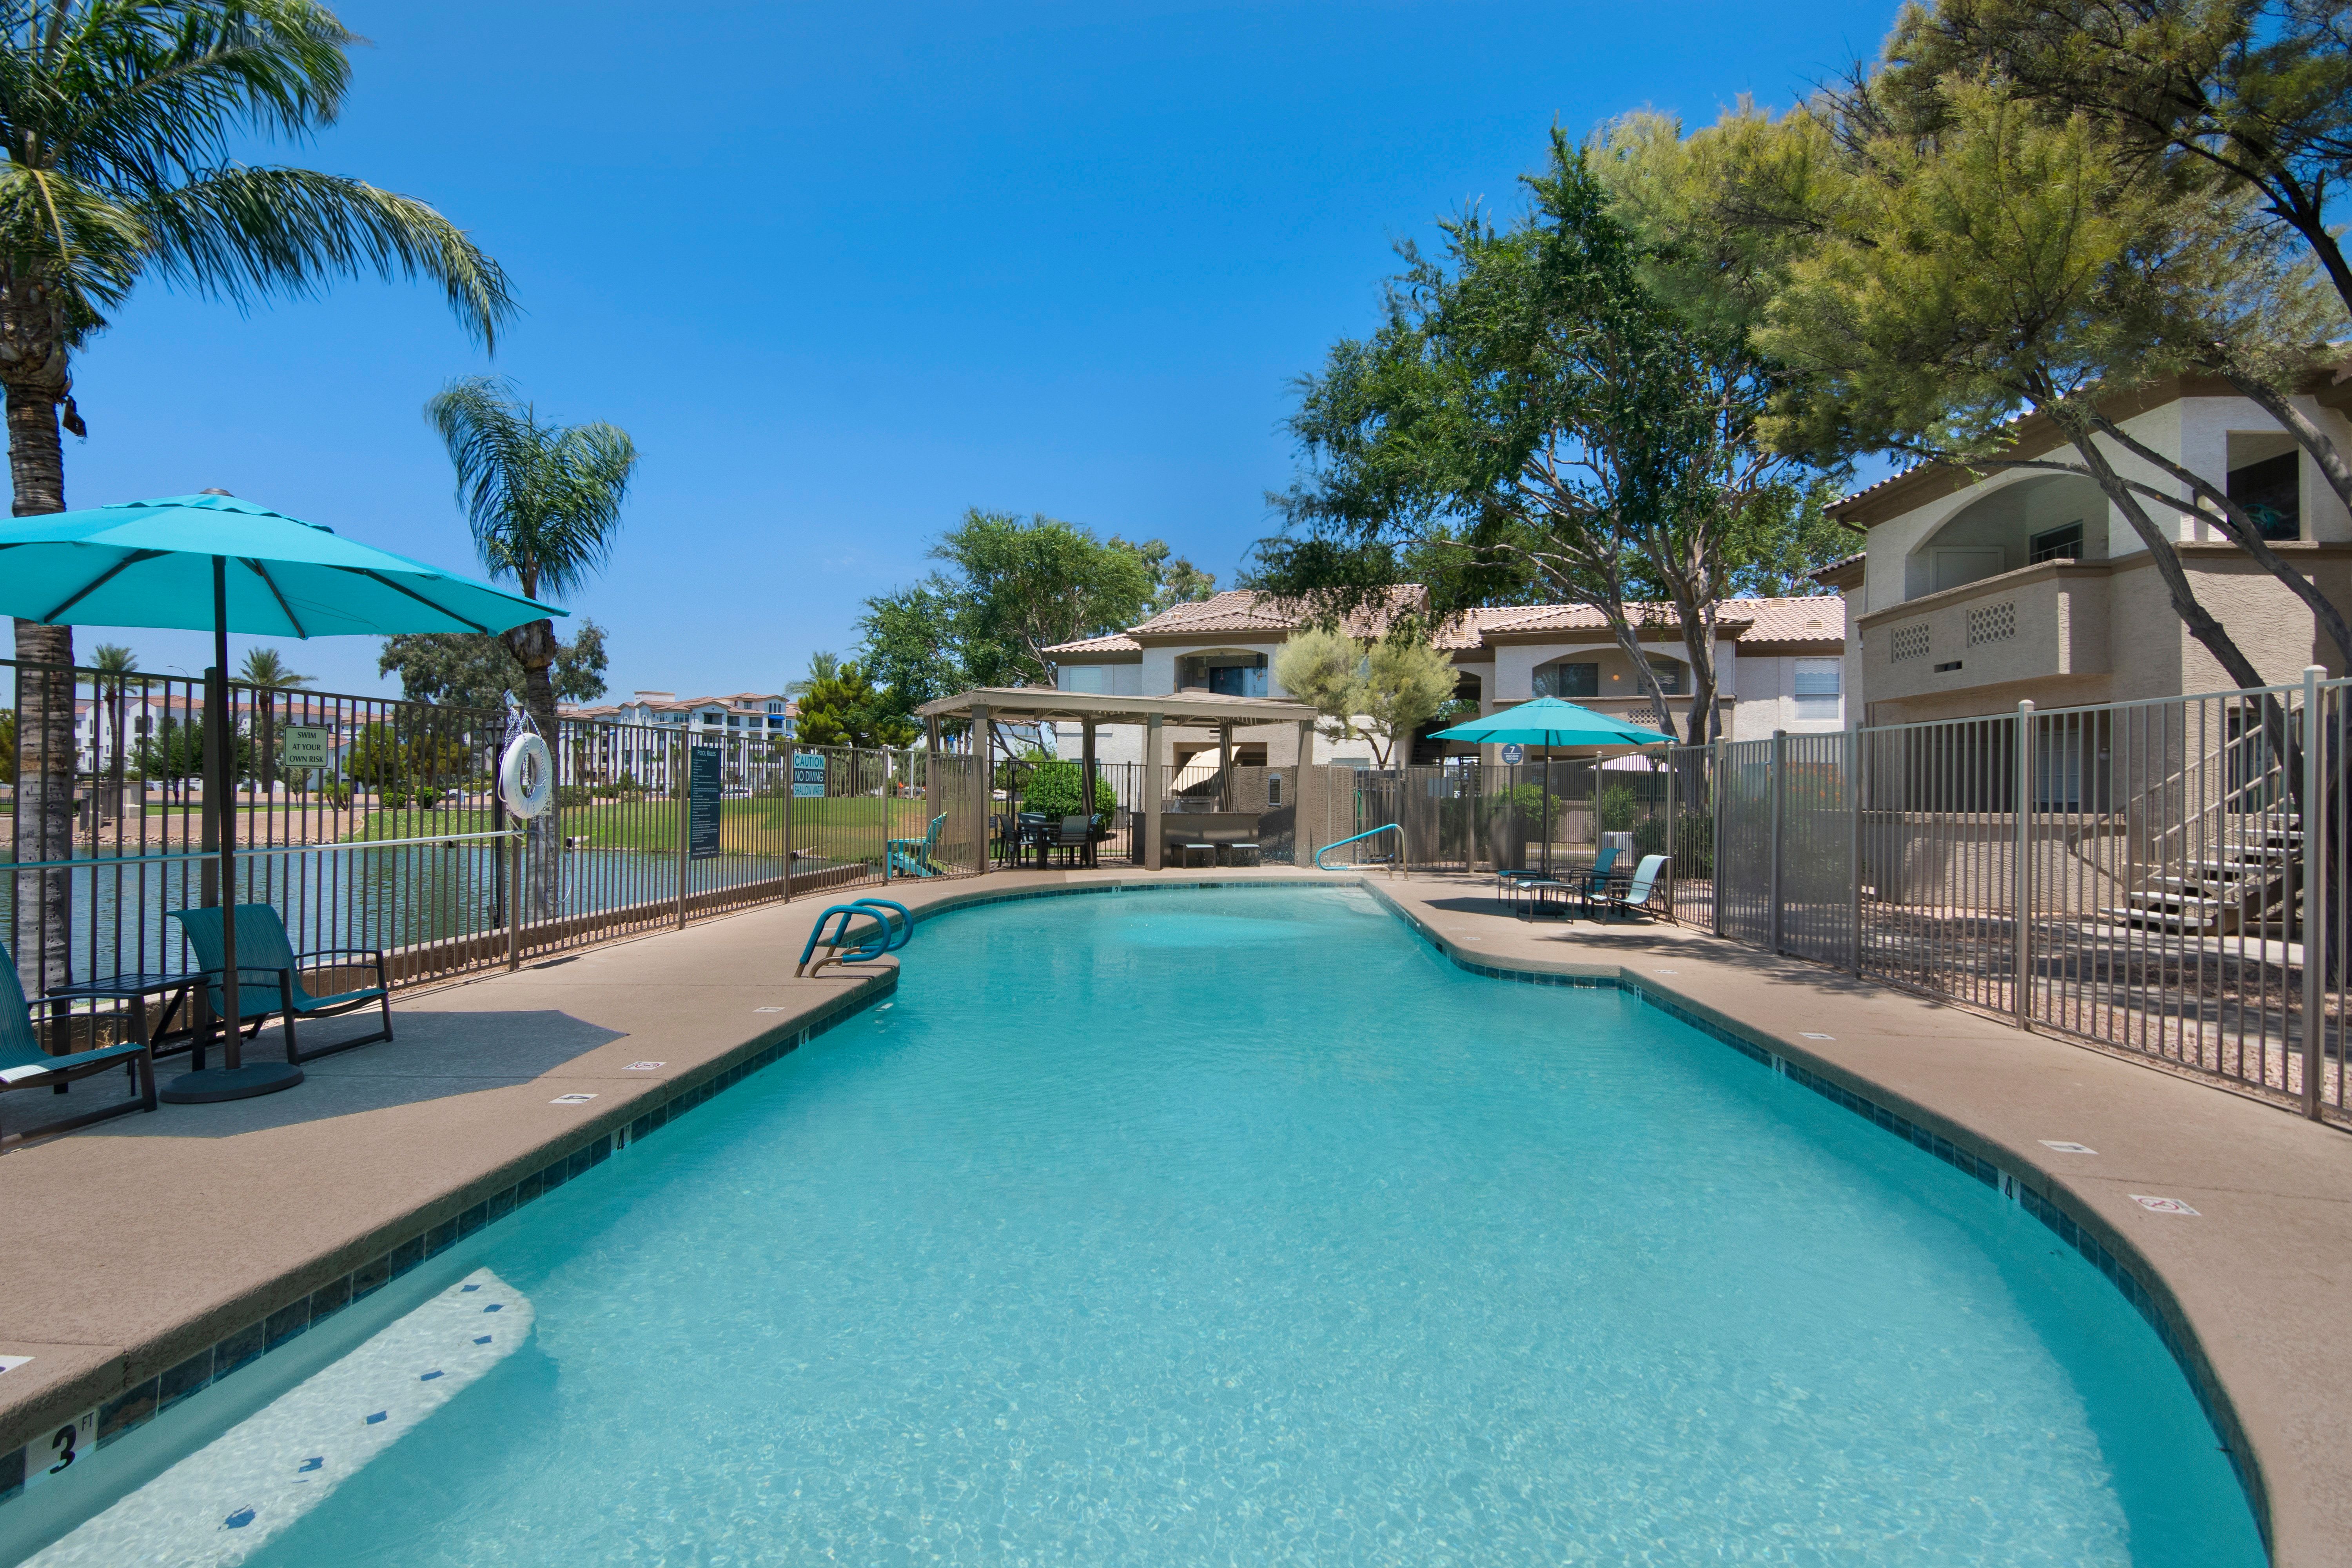 Gorgeous pool at Ocotillo Bay Apartments in Chandler, Arizona